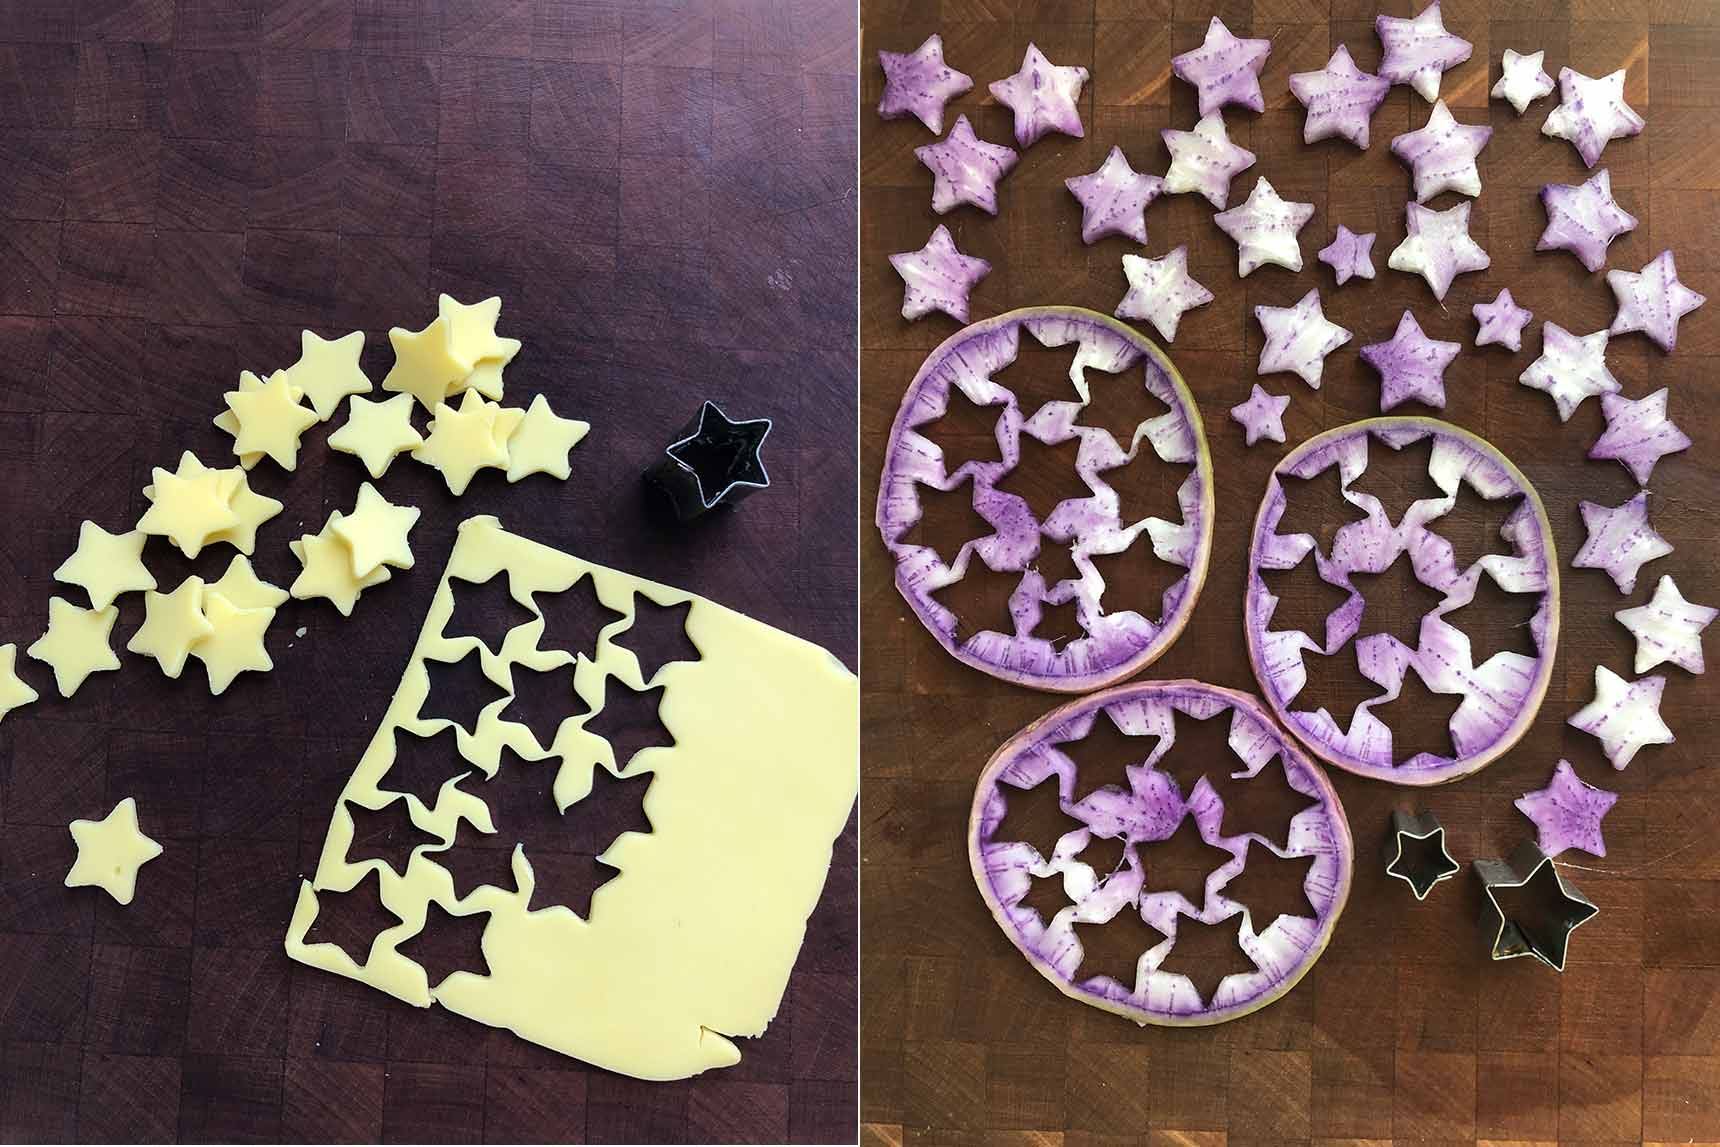 vegan cheese and purple daikon stars